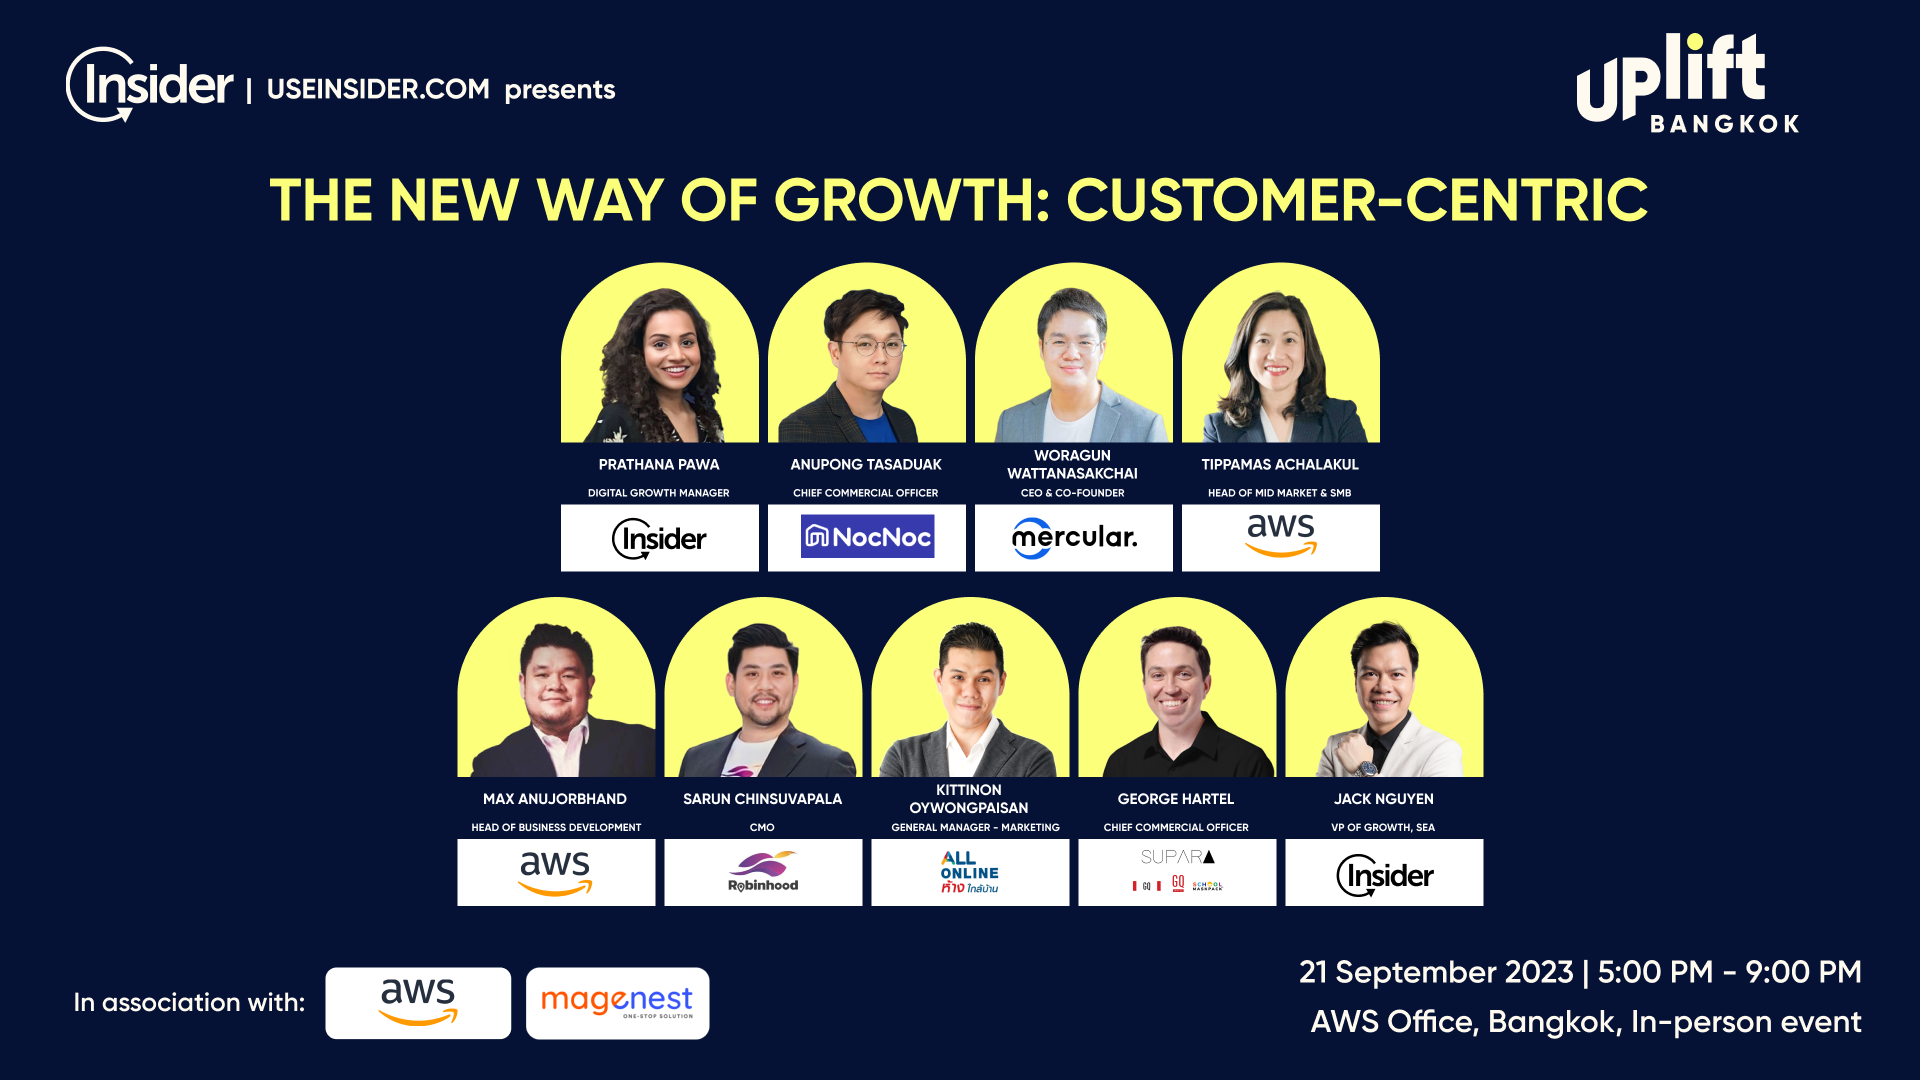 Magenest x Insider x AWS UPLIFT BANGKOK #1 The New Way of Growth: Customer Centricity